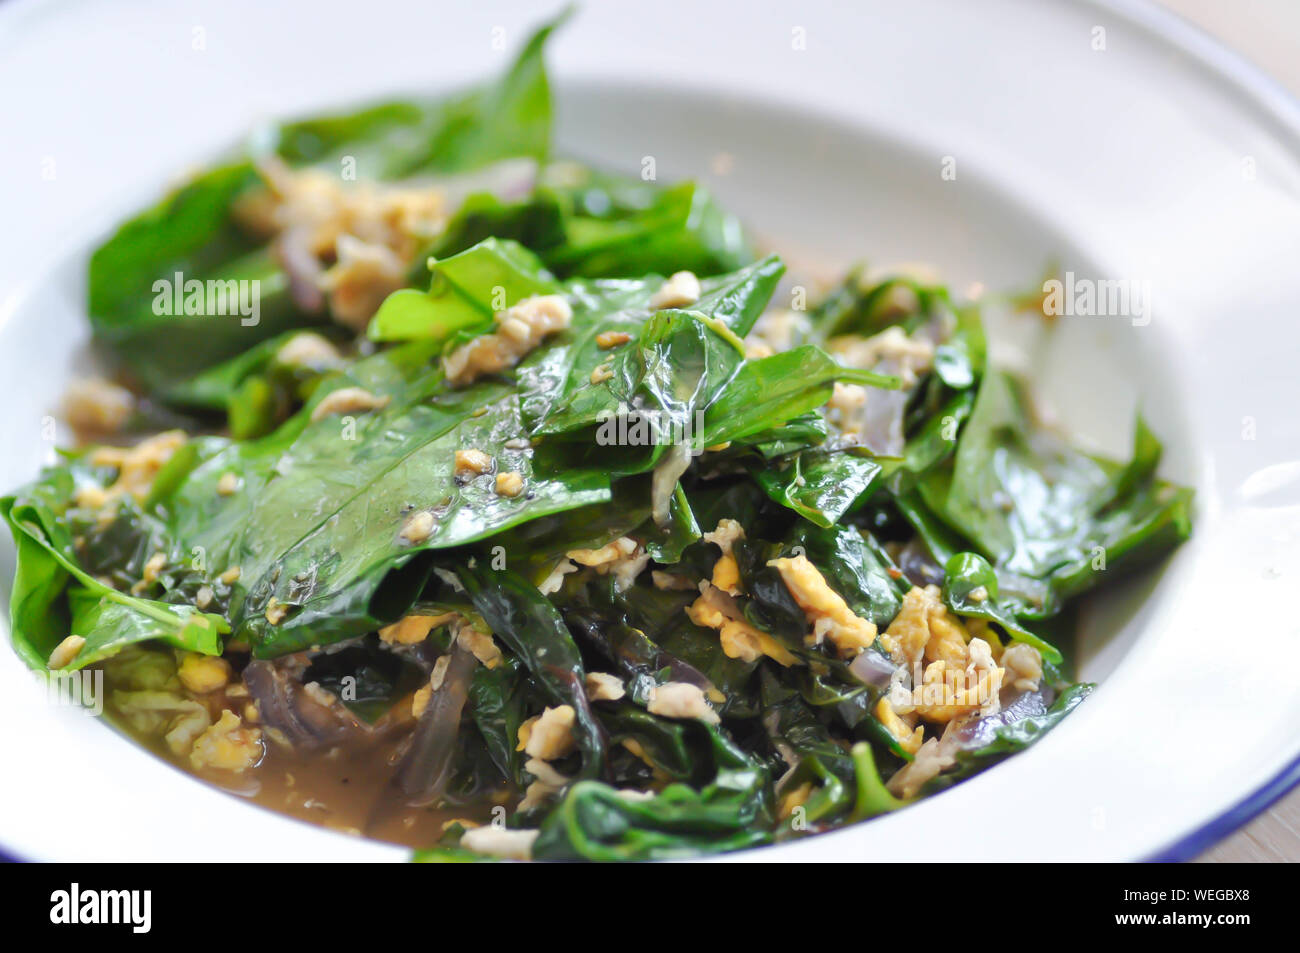 stir-fried vegetable or stir-fried baegu with egg, Thai food Stock Photo